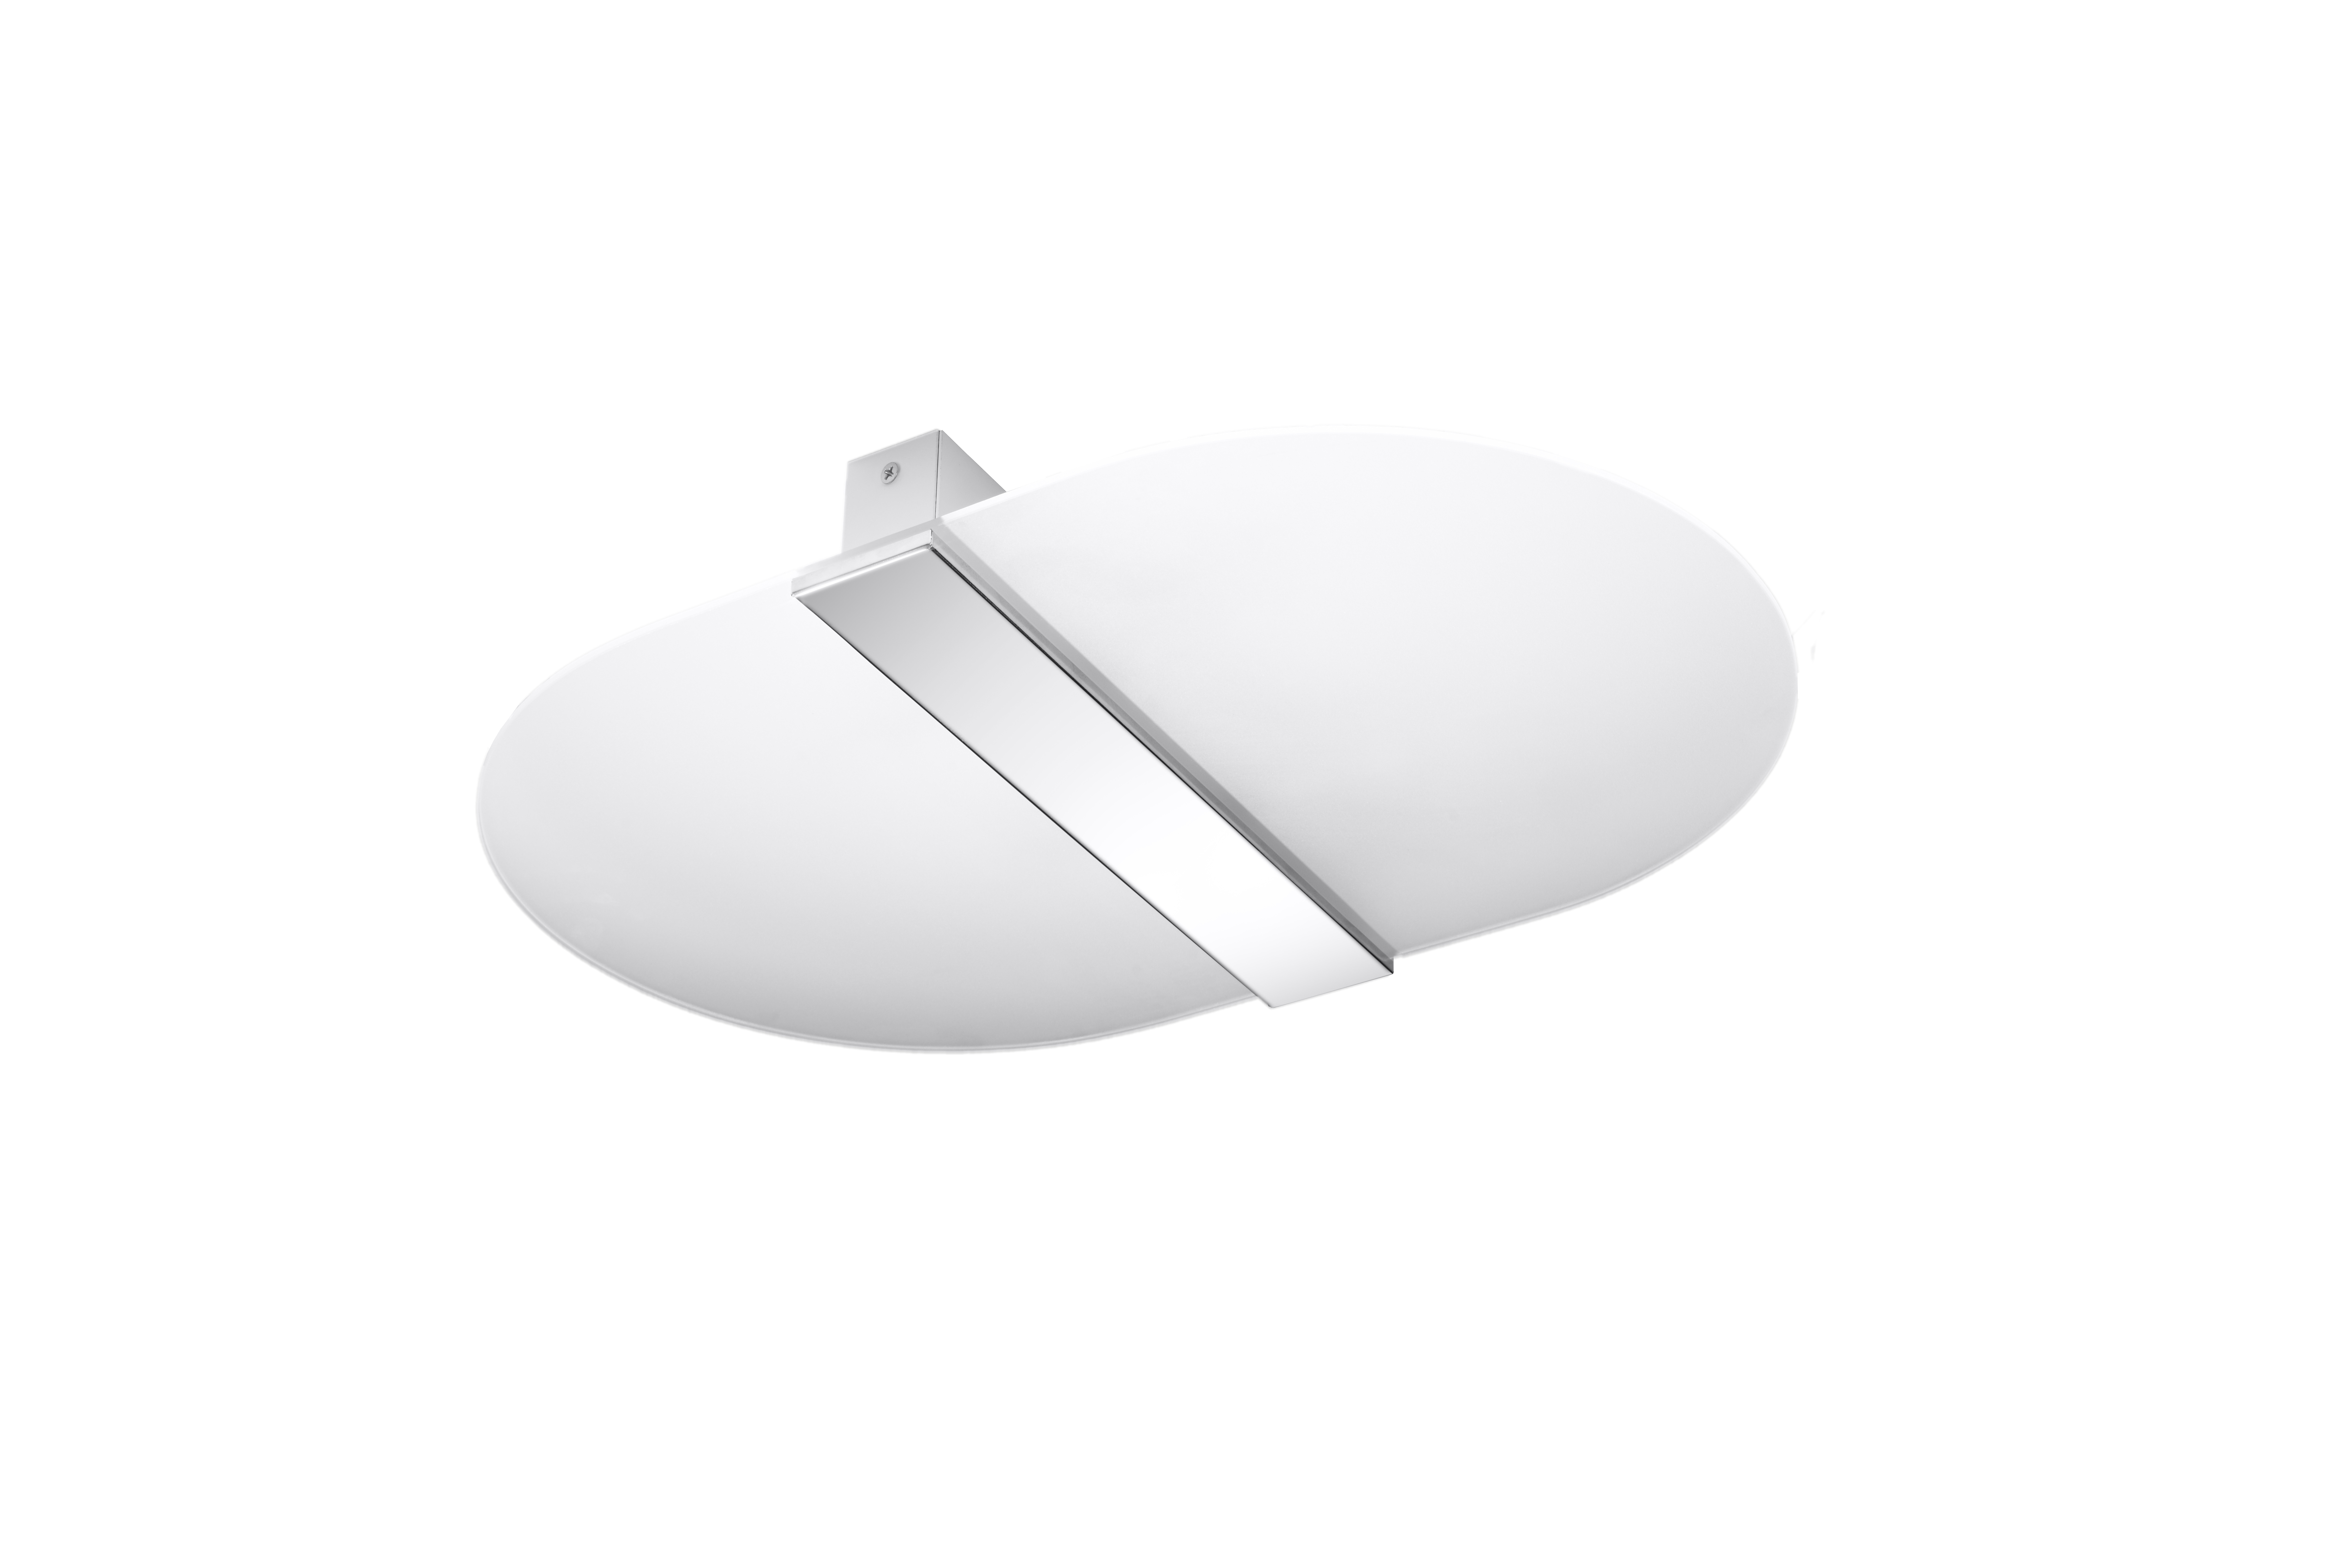 LED Glas Deckenleuchte oval inkl. LED warmweiß 2x4,5W | LichtED.de - LED  Lampen und Beleuchtung